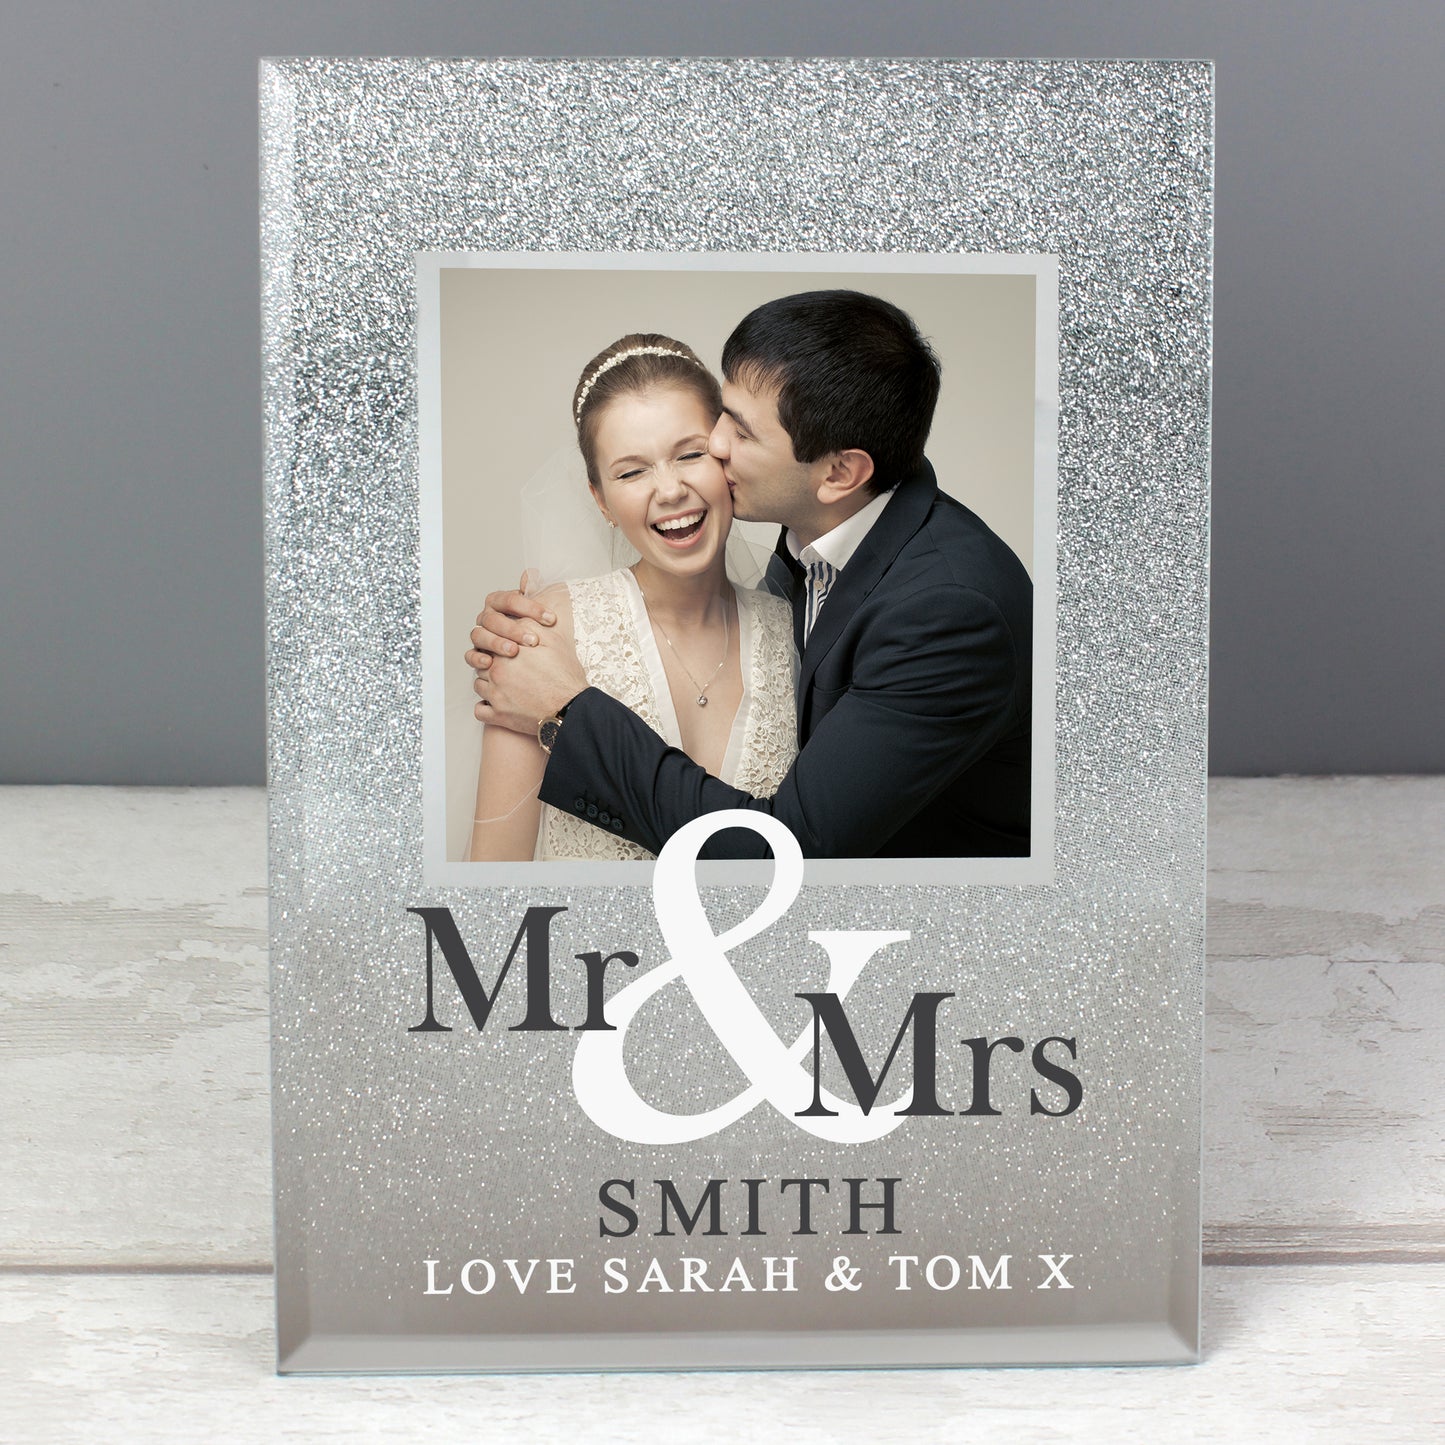 Personalised Mr & Mrs 4x4 Glitter Glass Photo Frame - Personalise It!